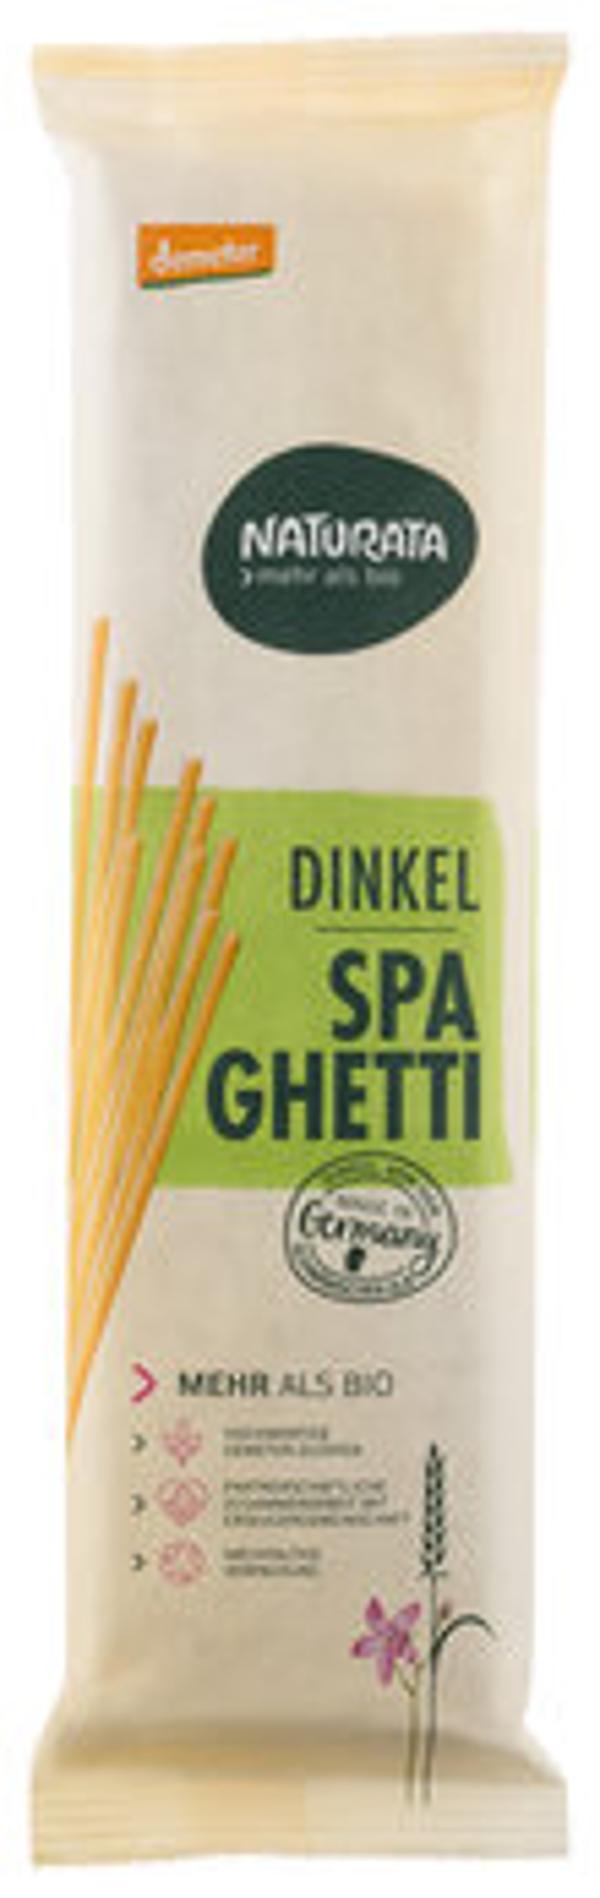 Produktfoto zu Dinkelspaghetti, 500 g